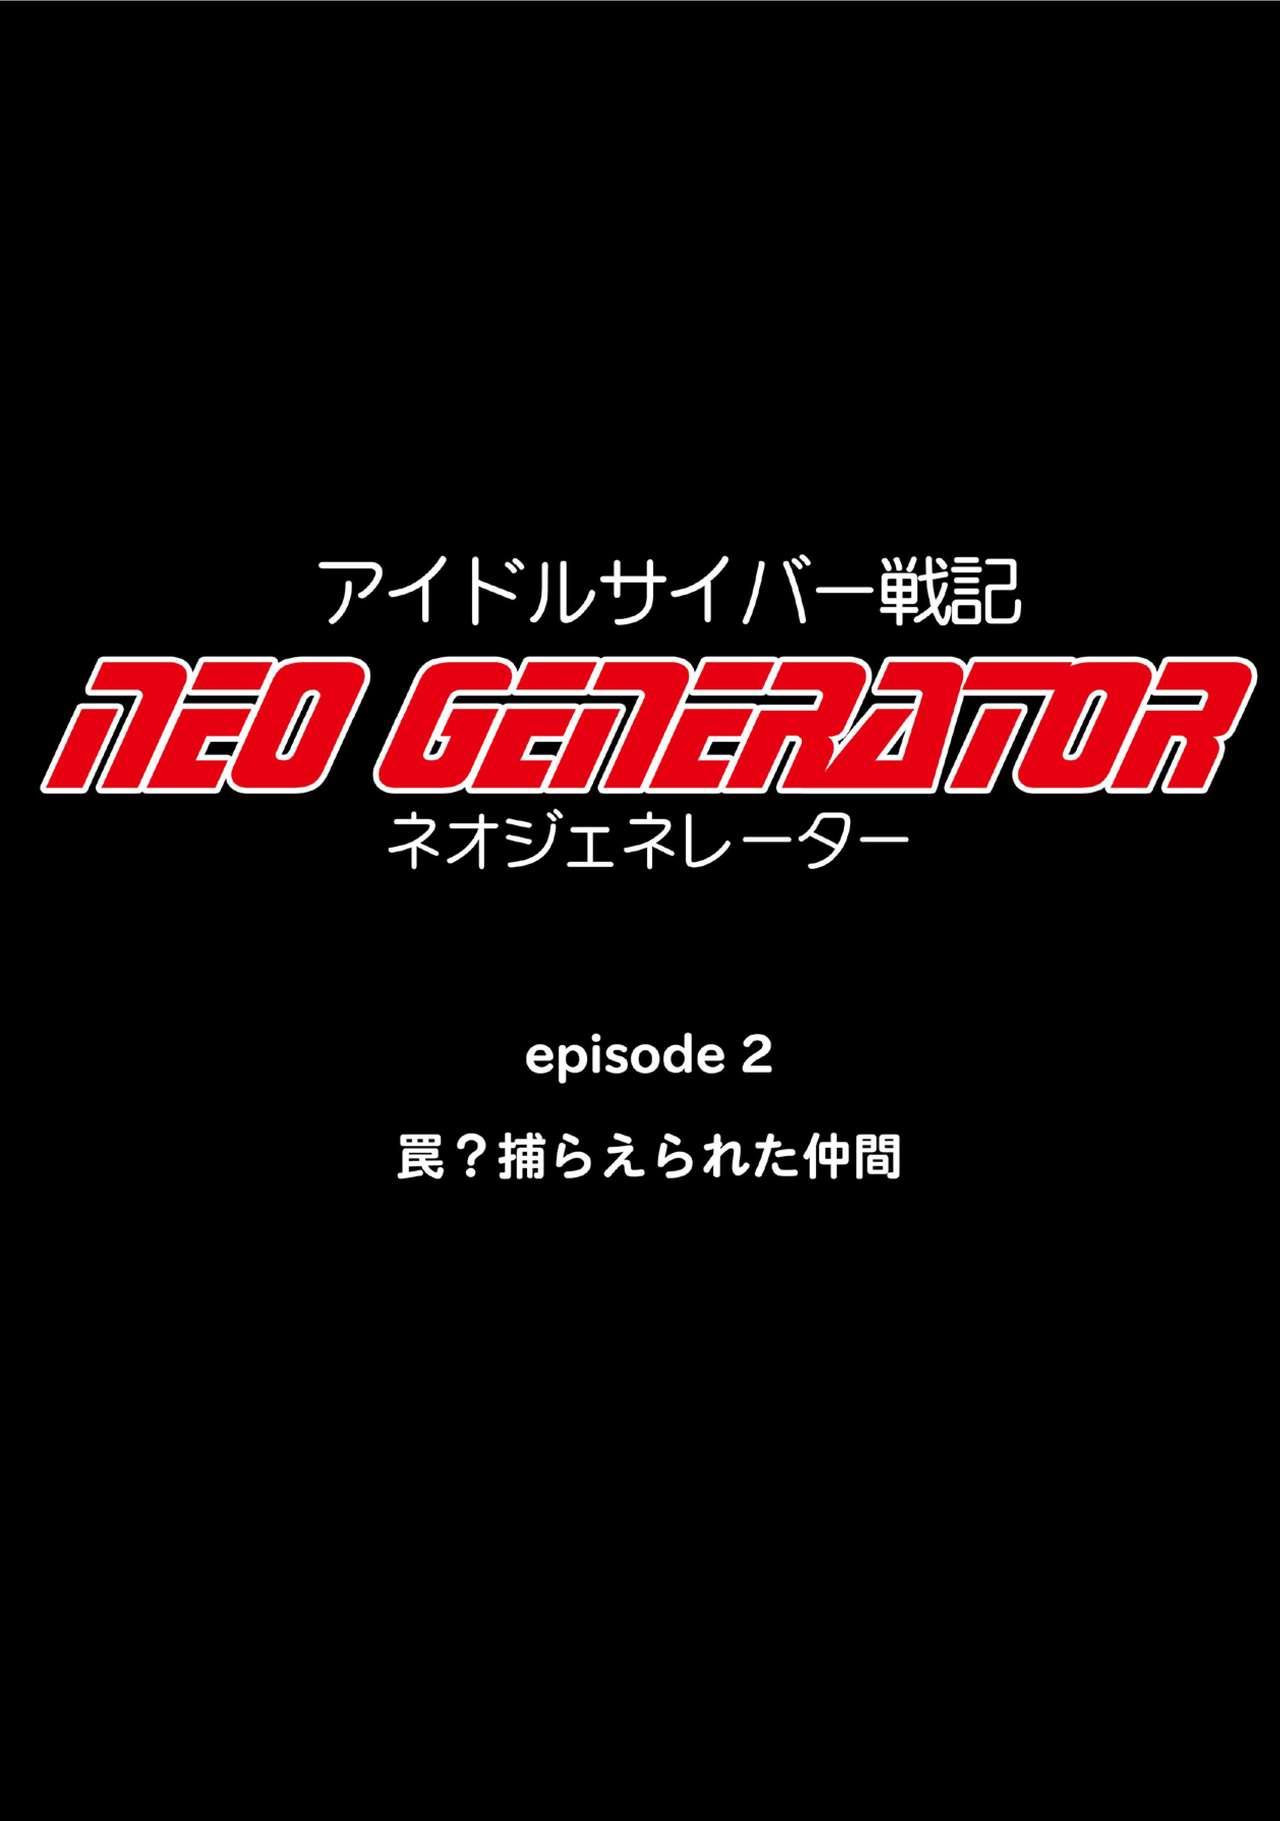 Idol Cyber Battle NEO GENERATOR episode 2 Wana? Torae rareta nakama 14